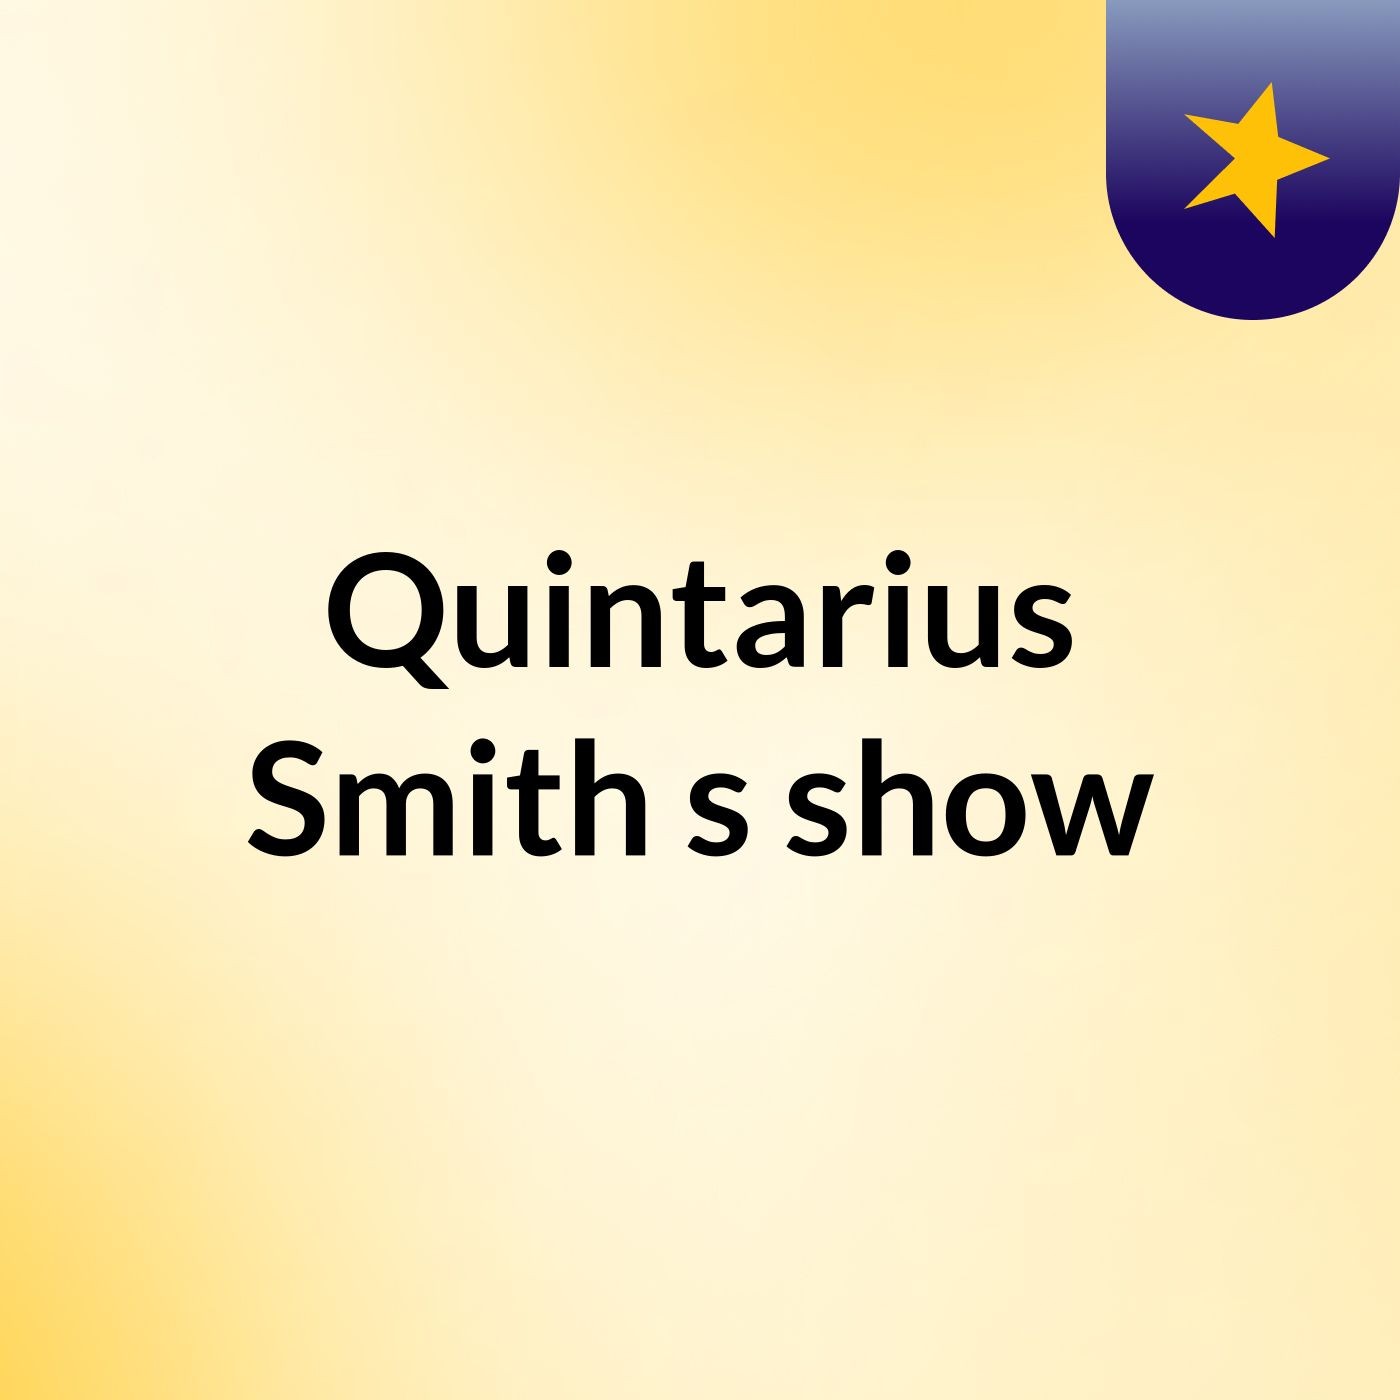 Quintarius Smith's show